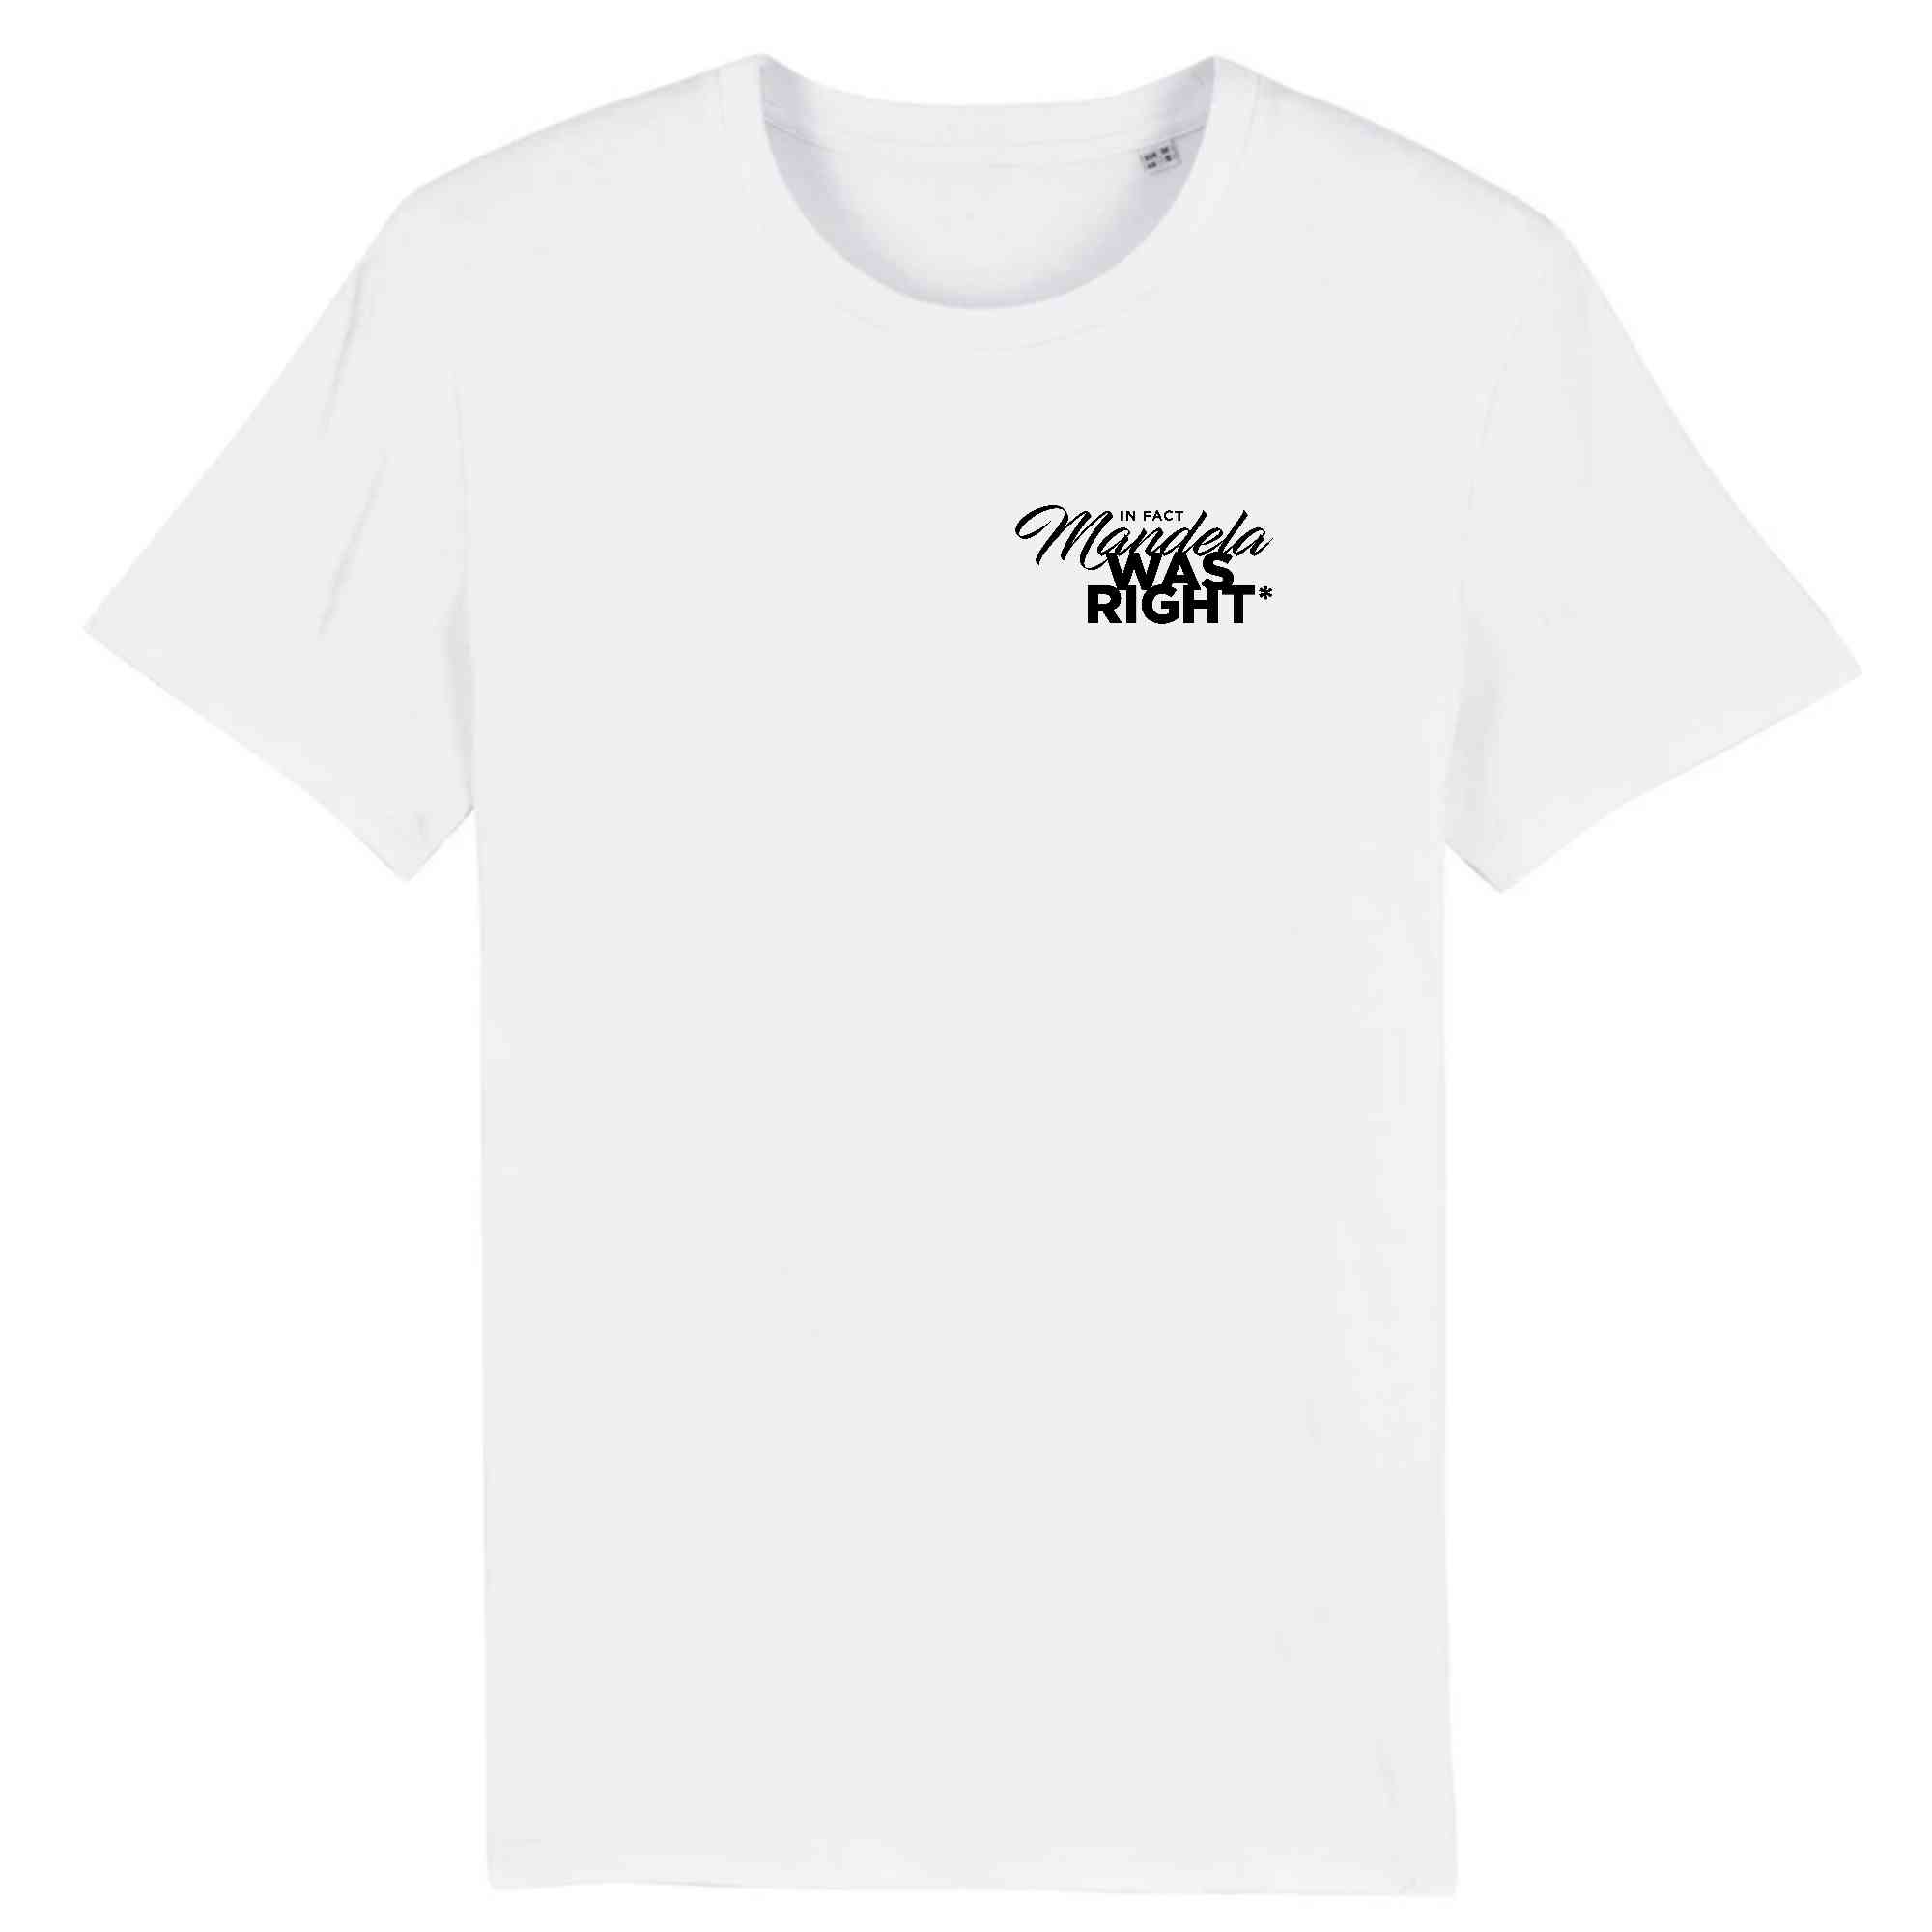 T-shirt blanc et noir en coton bio Mandella WAS RIGHT - Collection Tshirt inspirant